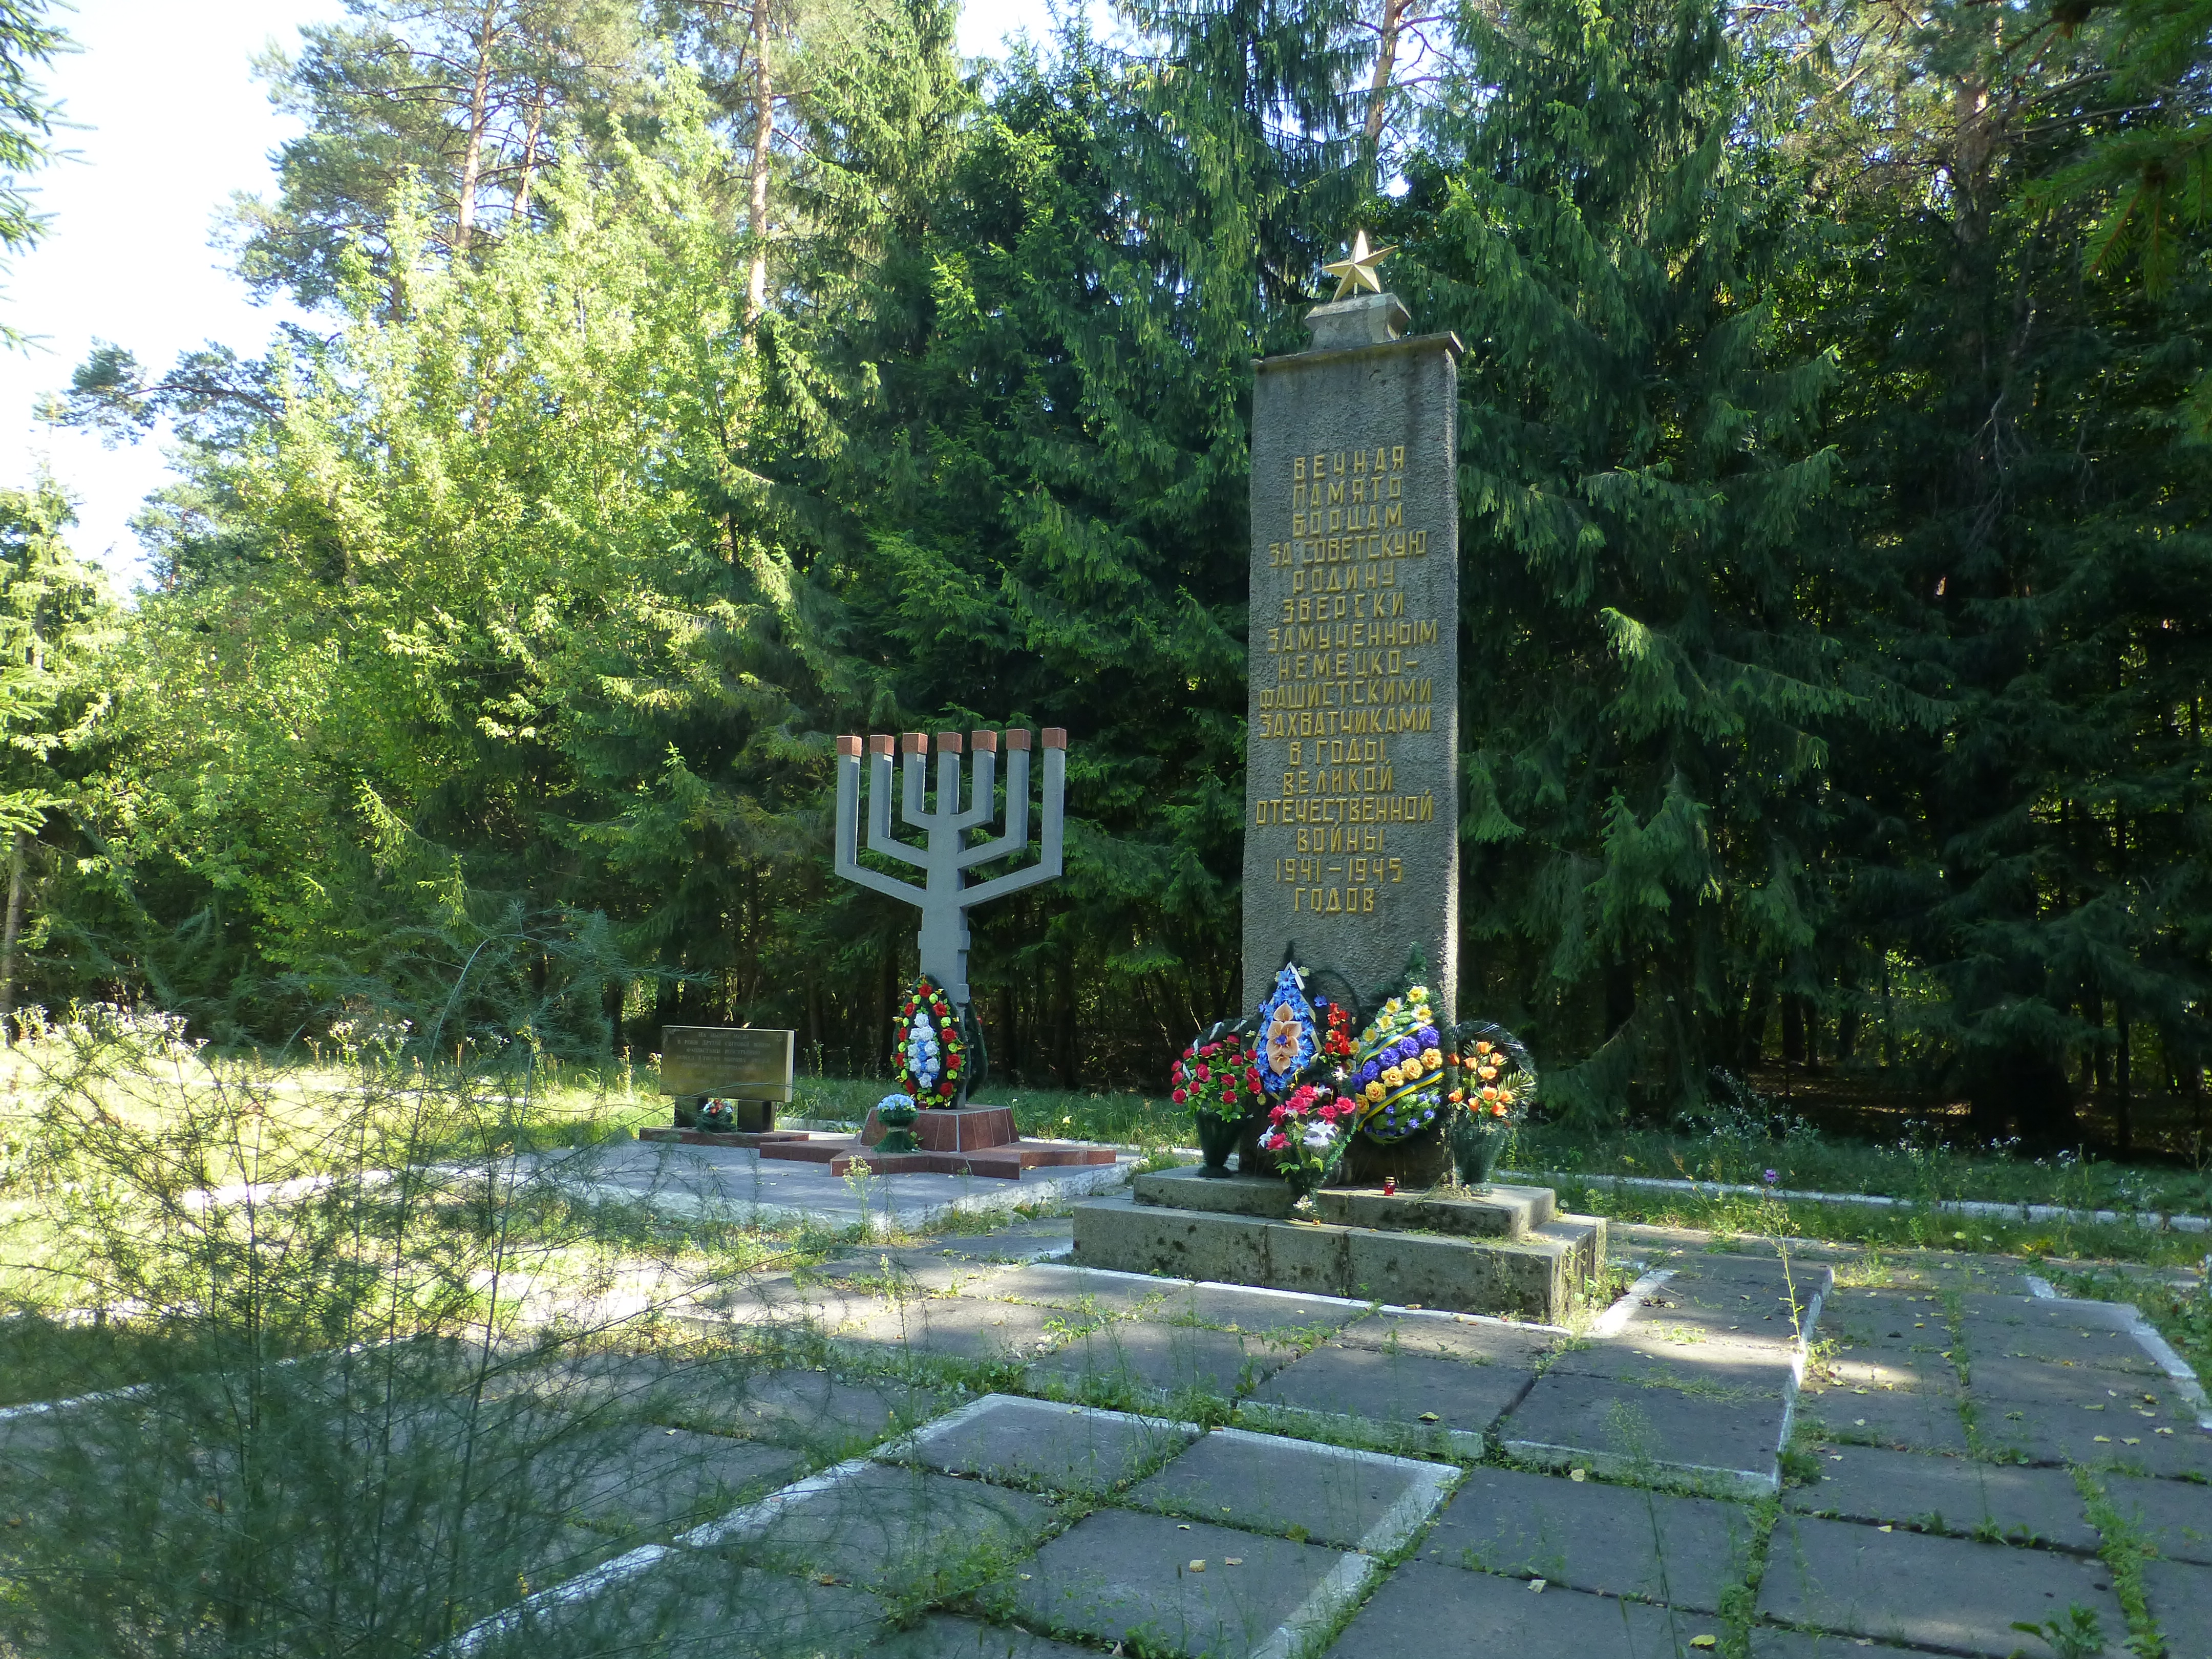 Memorial to the killing of Shepetivka Jews in WW2